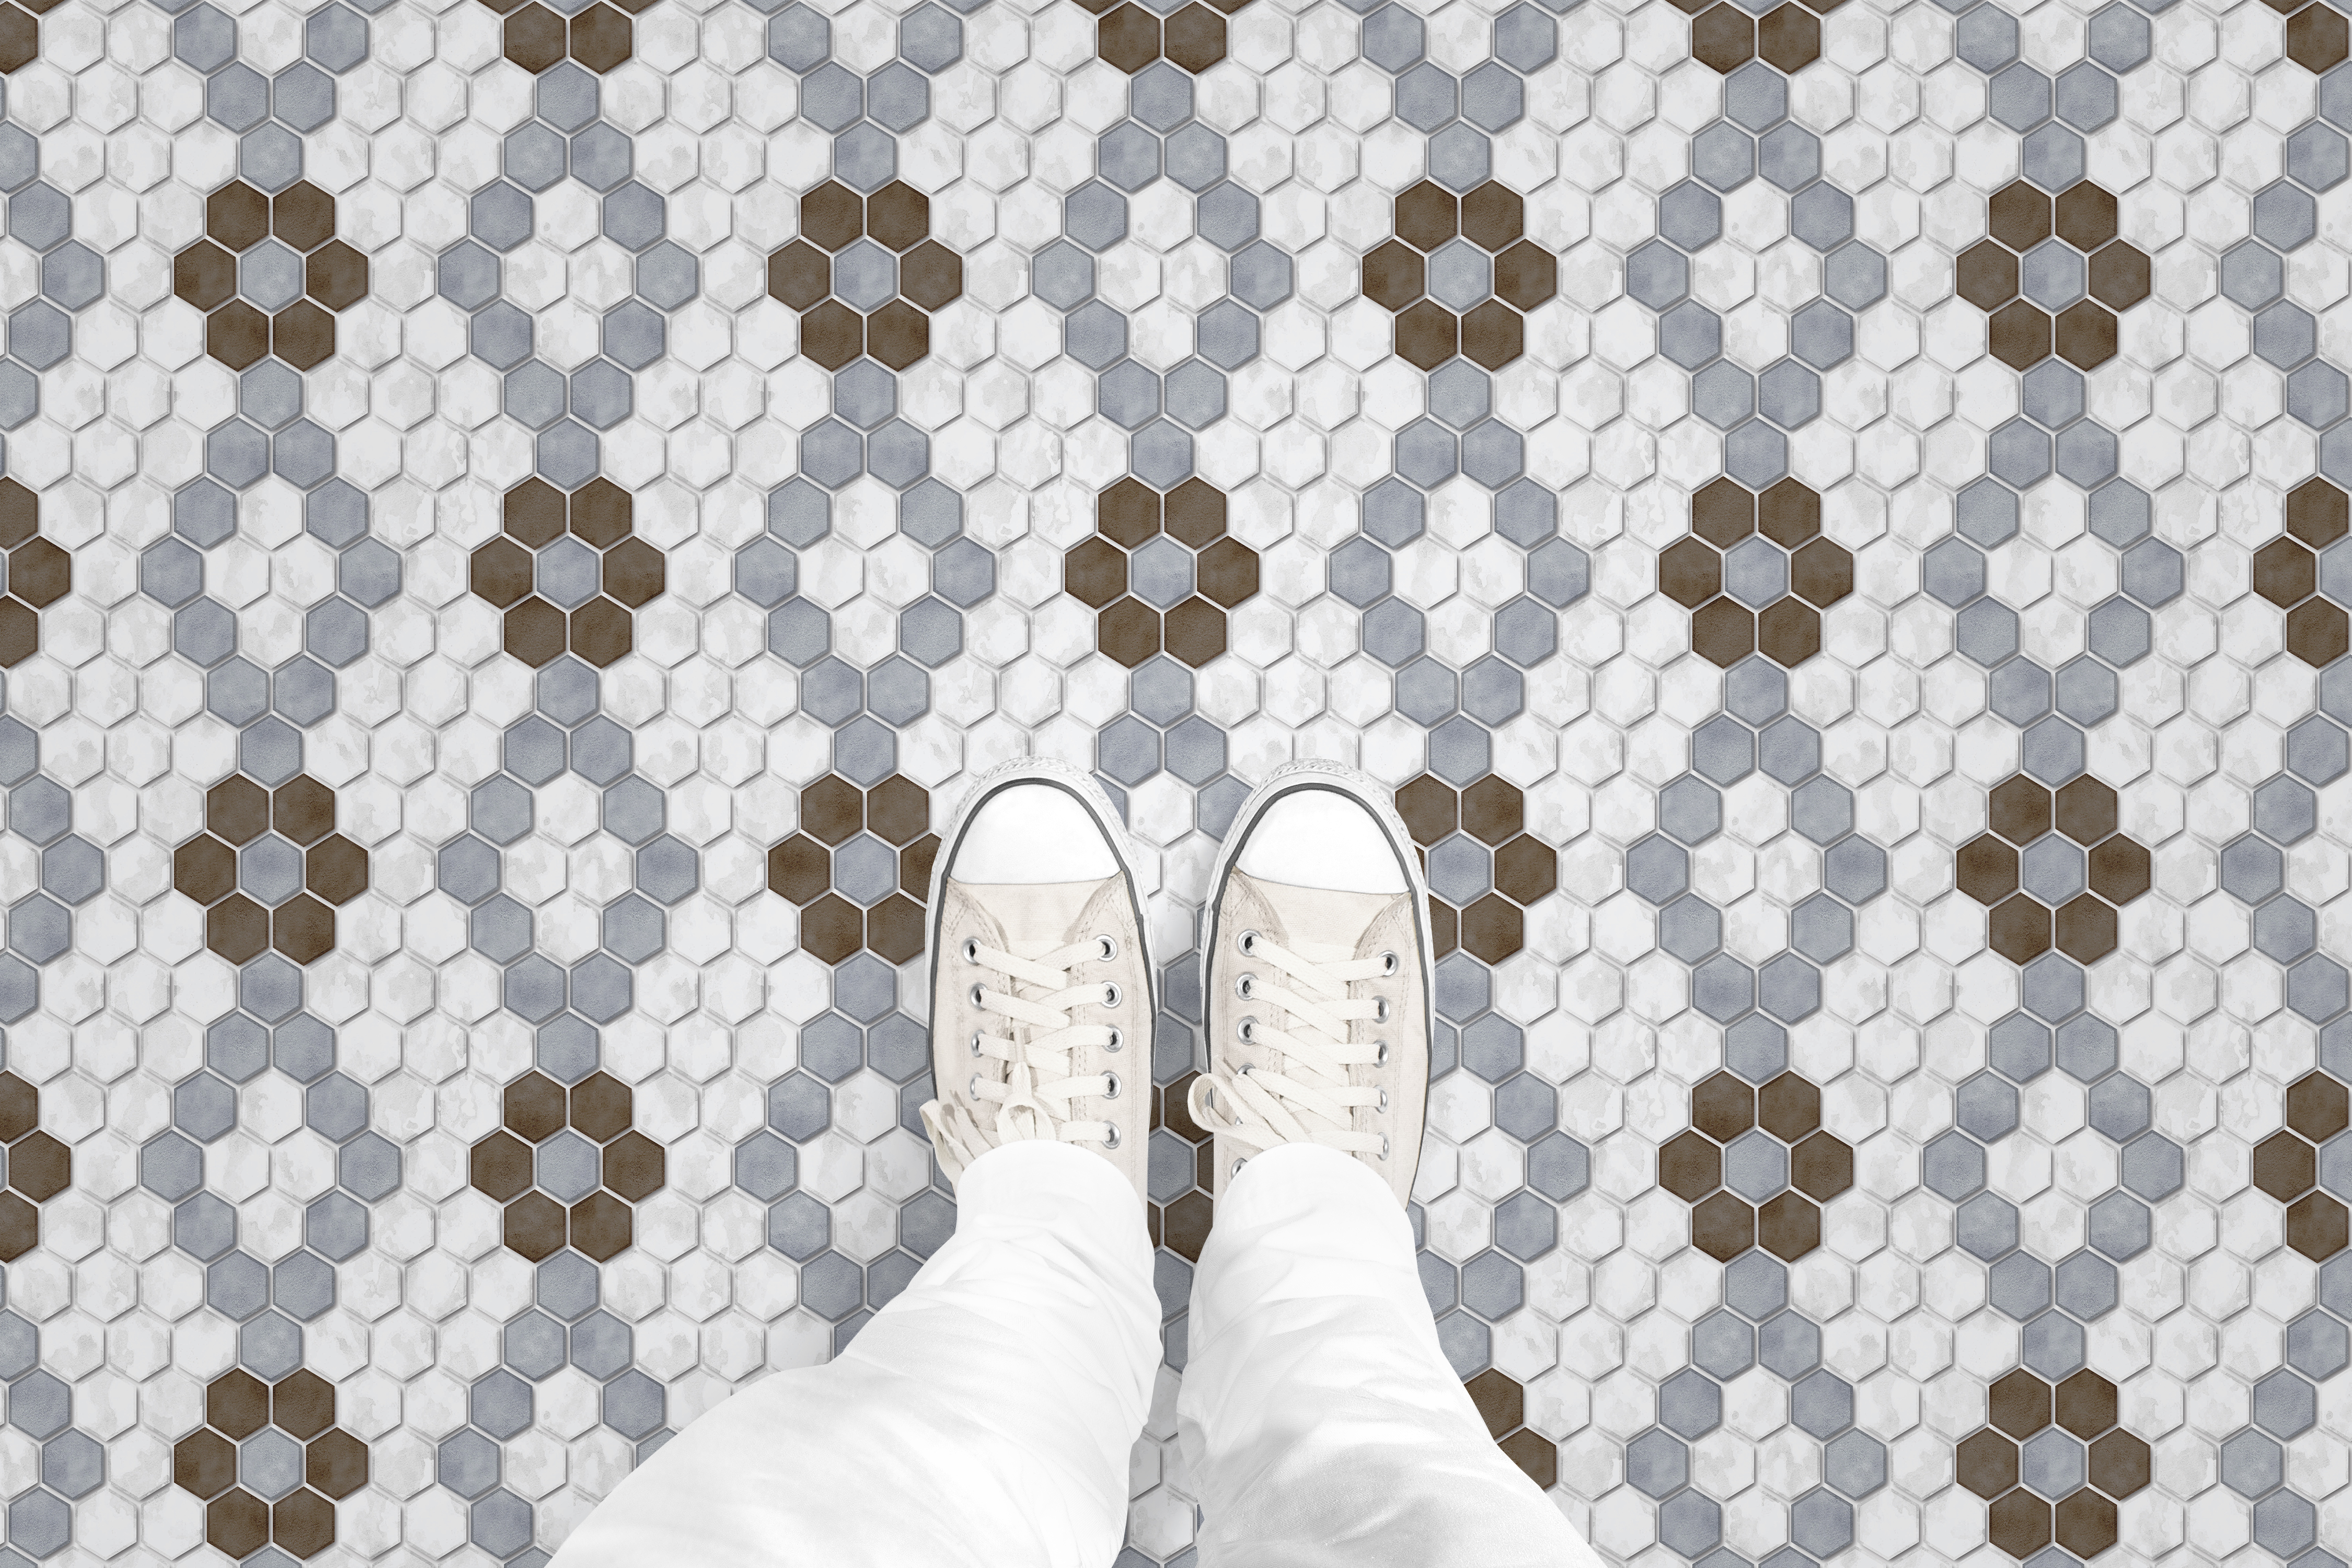 Washington Tile floor_feet_shop.gif_p2236a1.jpg